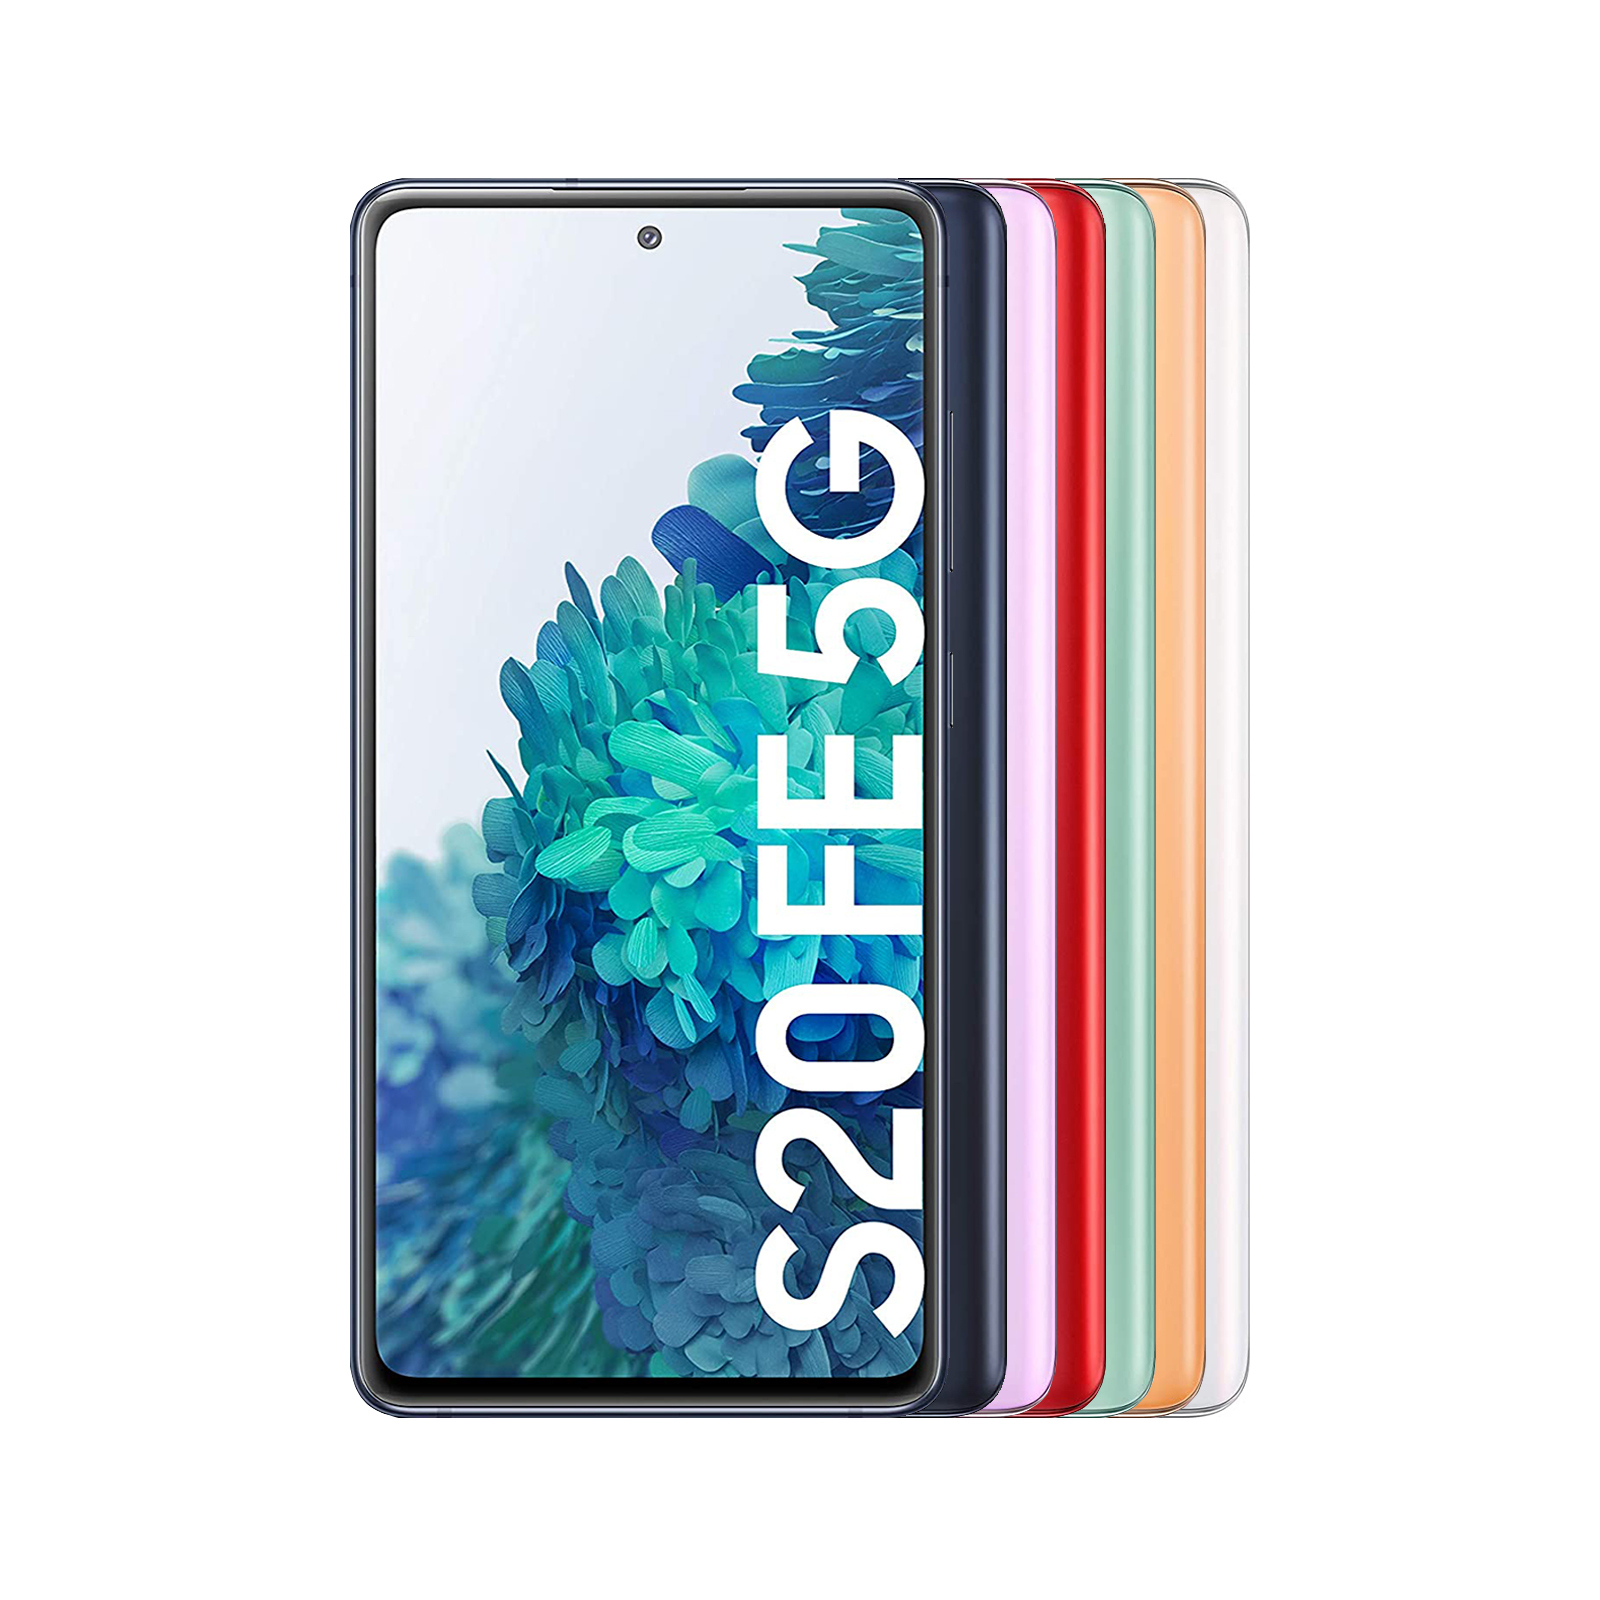 Samsung Galaxy S20 FE 5G - Good Condition